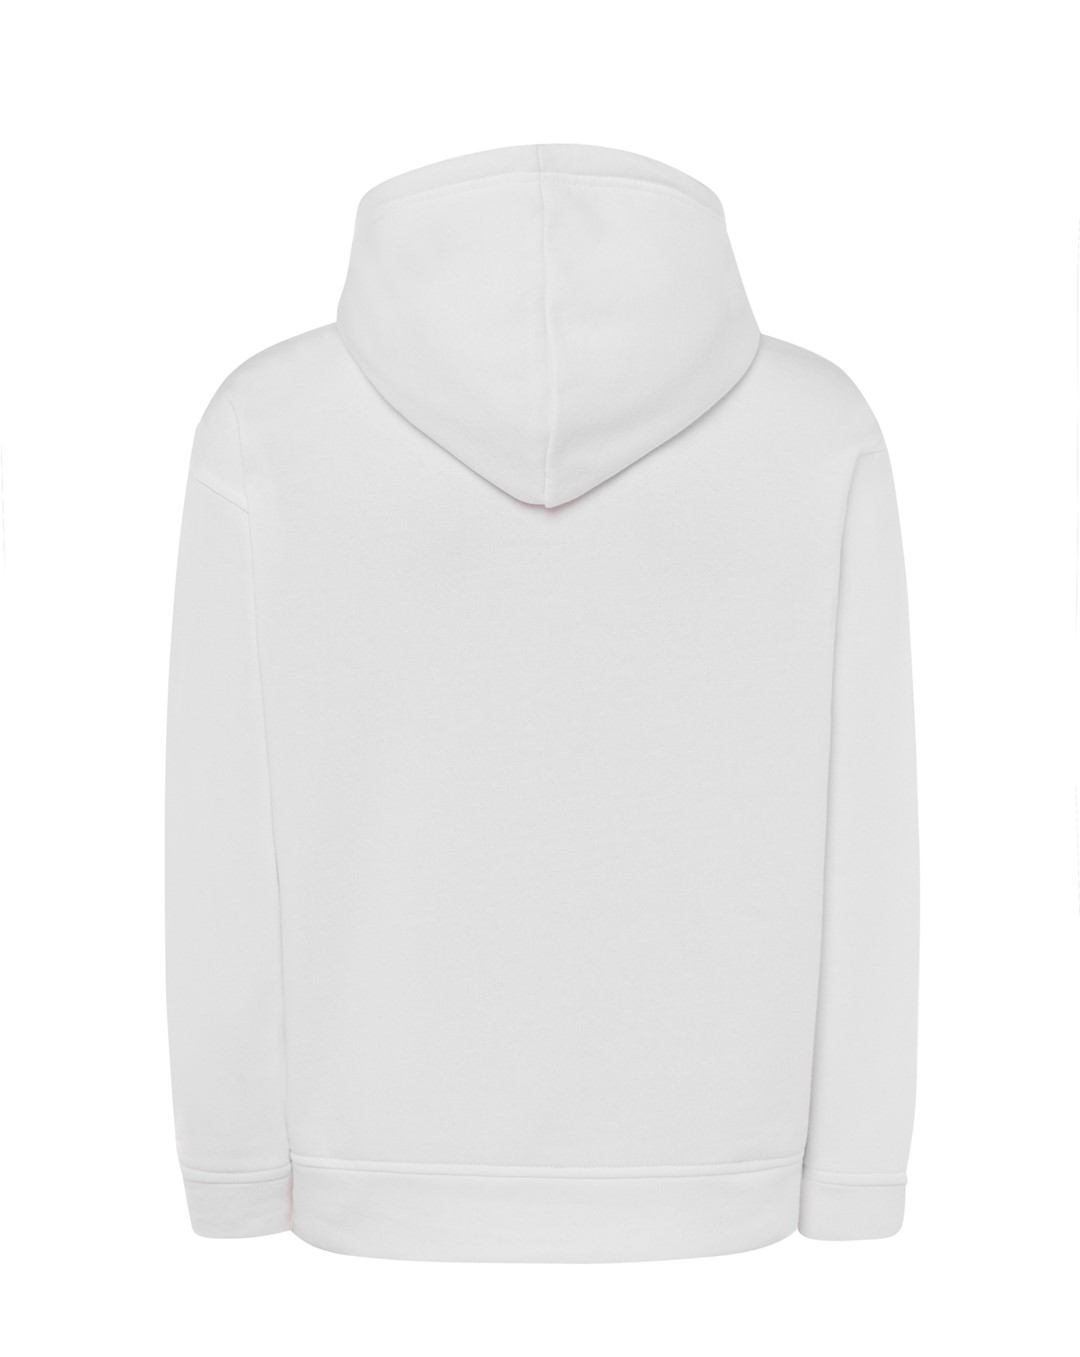 Men’s hoody sweatshirt for printing